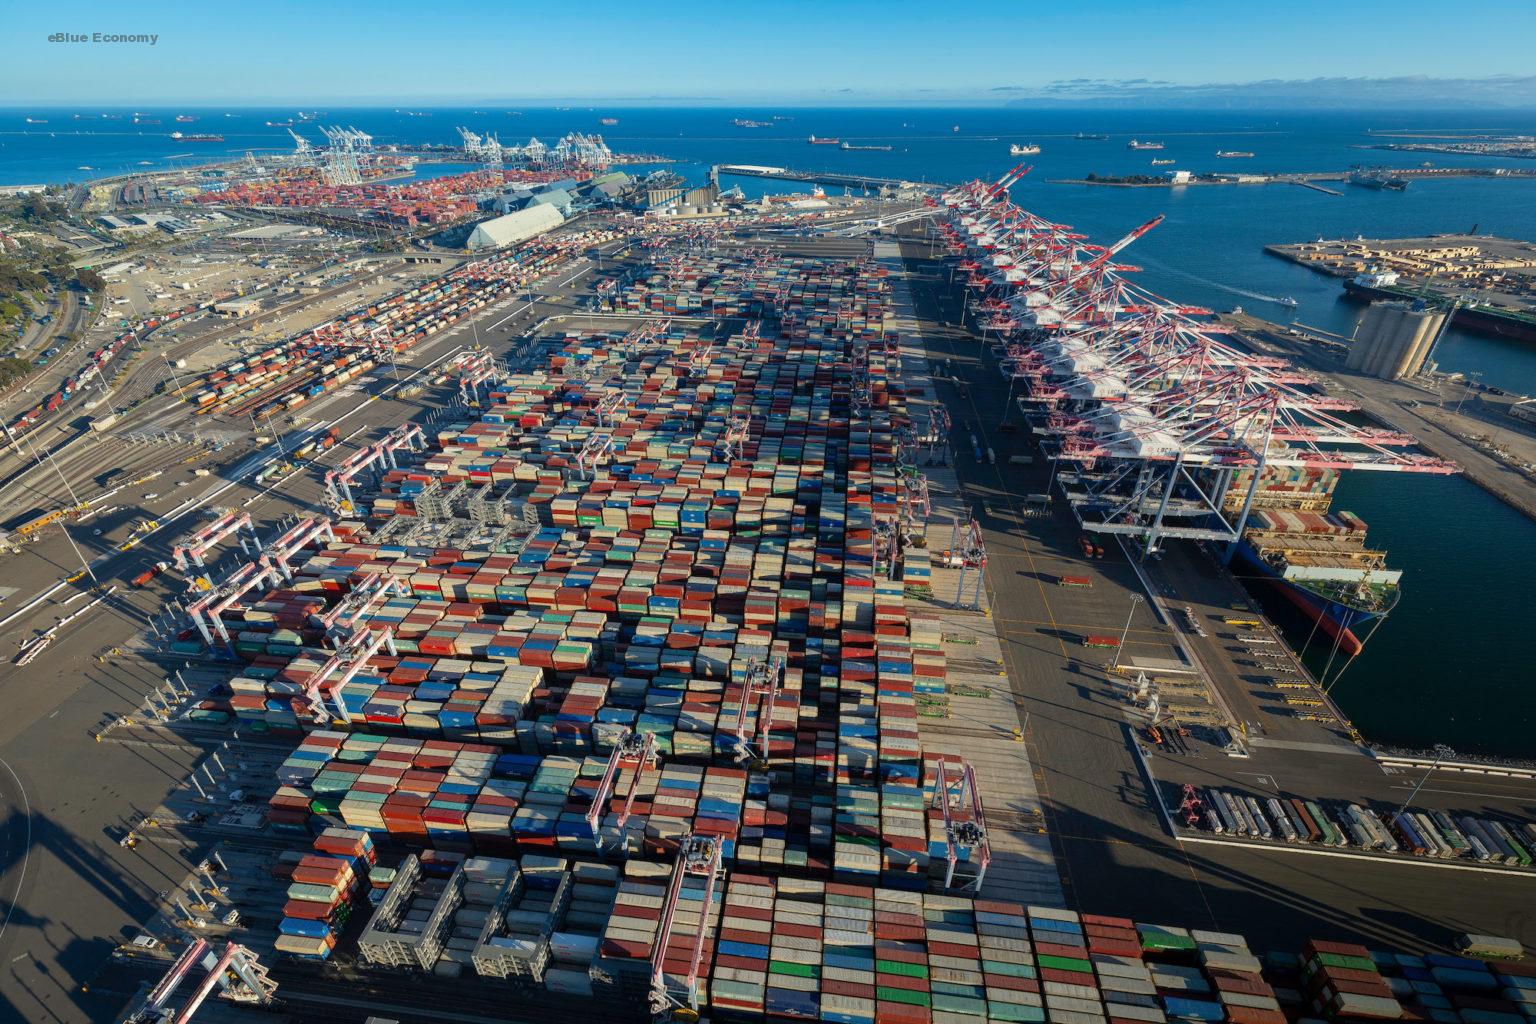 eBlue_economy_port-of-long-beach-container-terminal